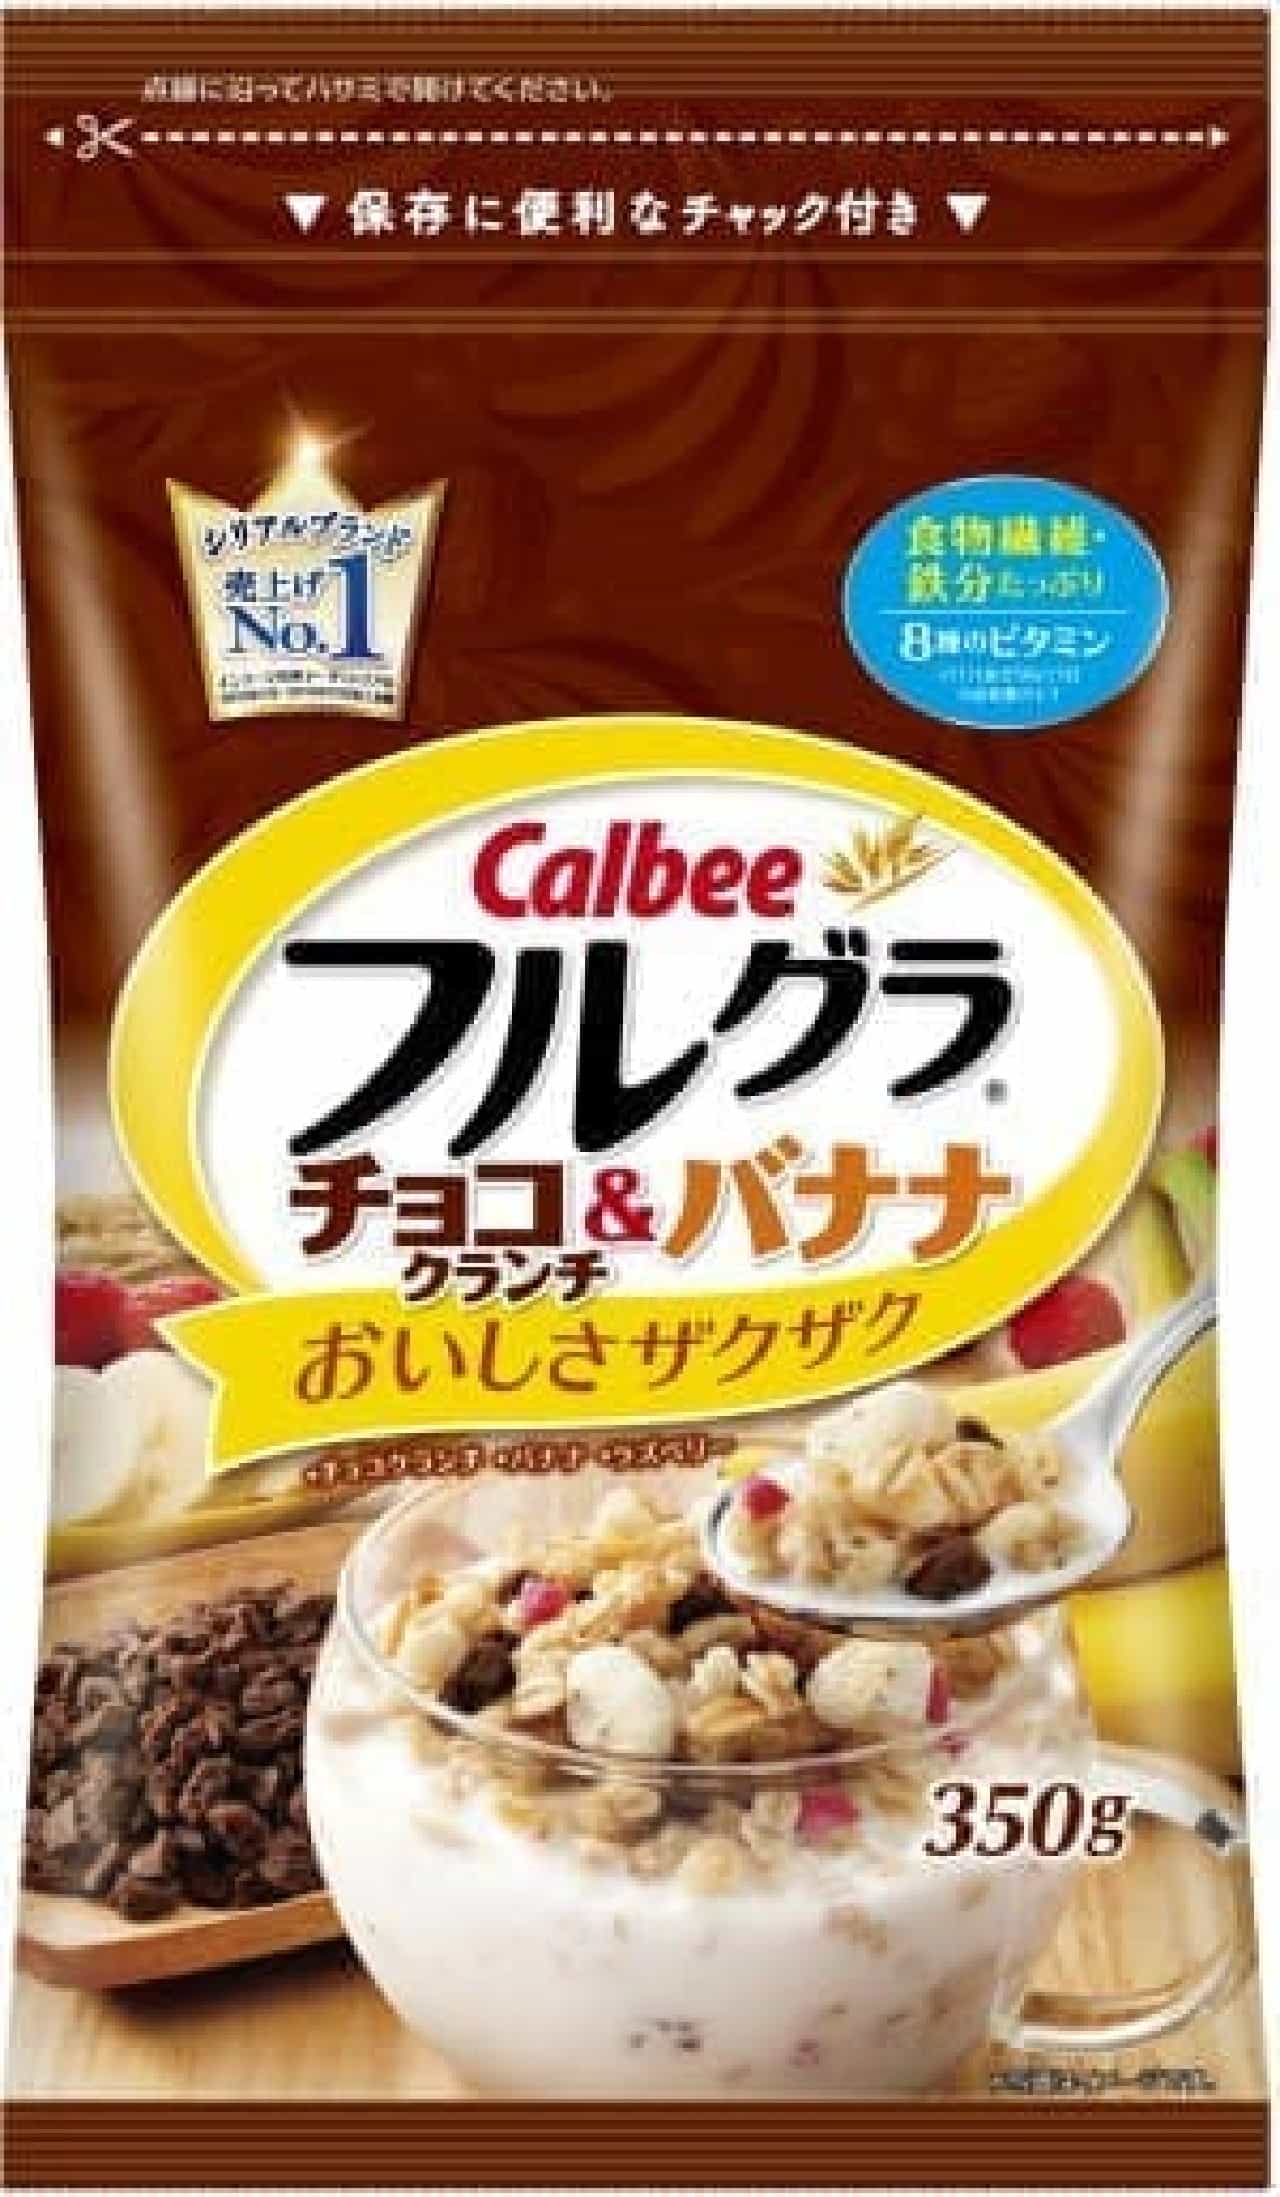 Calbee "Frugra Chocolate Crunch & Banana"